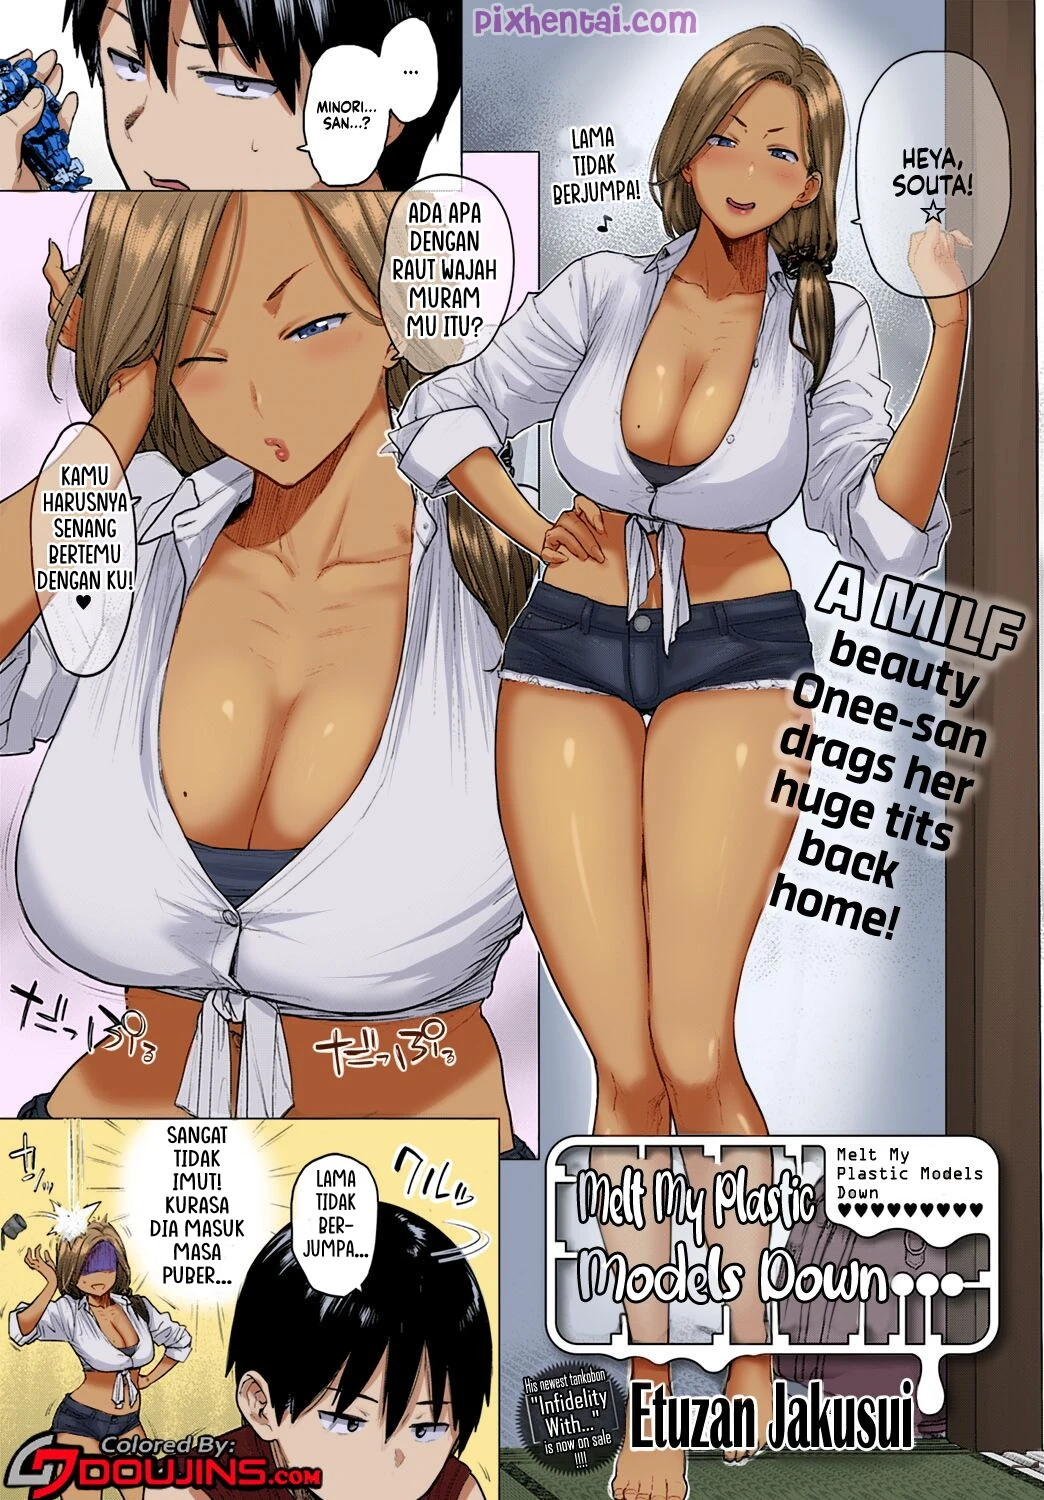 Komik hentai xxx manga sex bokep A MILF Beauty Onee san drags her Huge Tits back Home 2